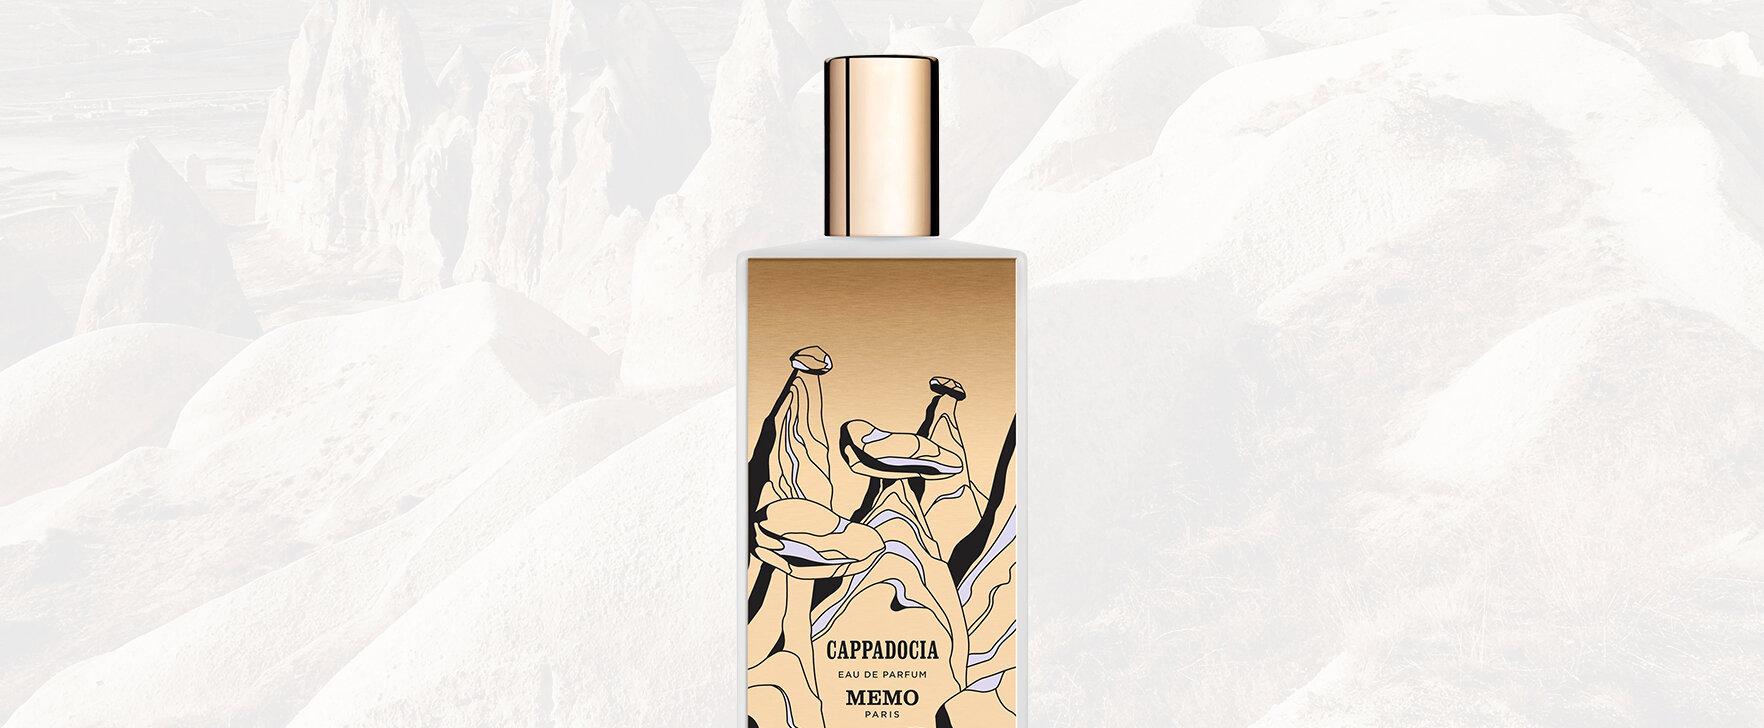 A Fragrance Journey Through Cappadocia: The New Eau de Parfum Cappadocia From Memo Paris